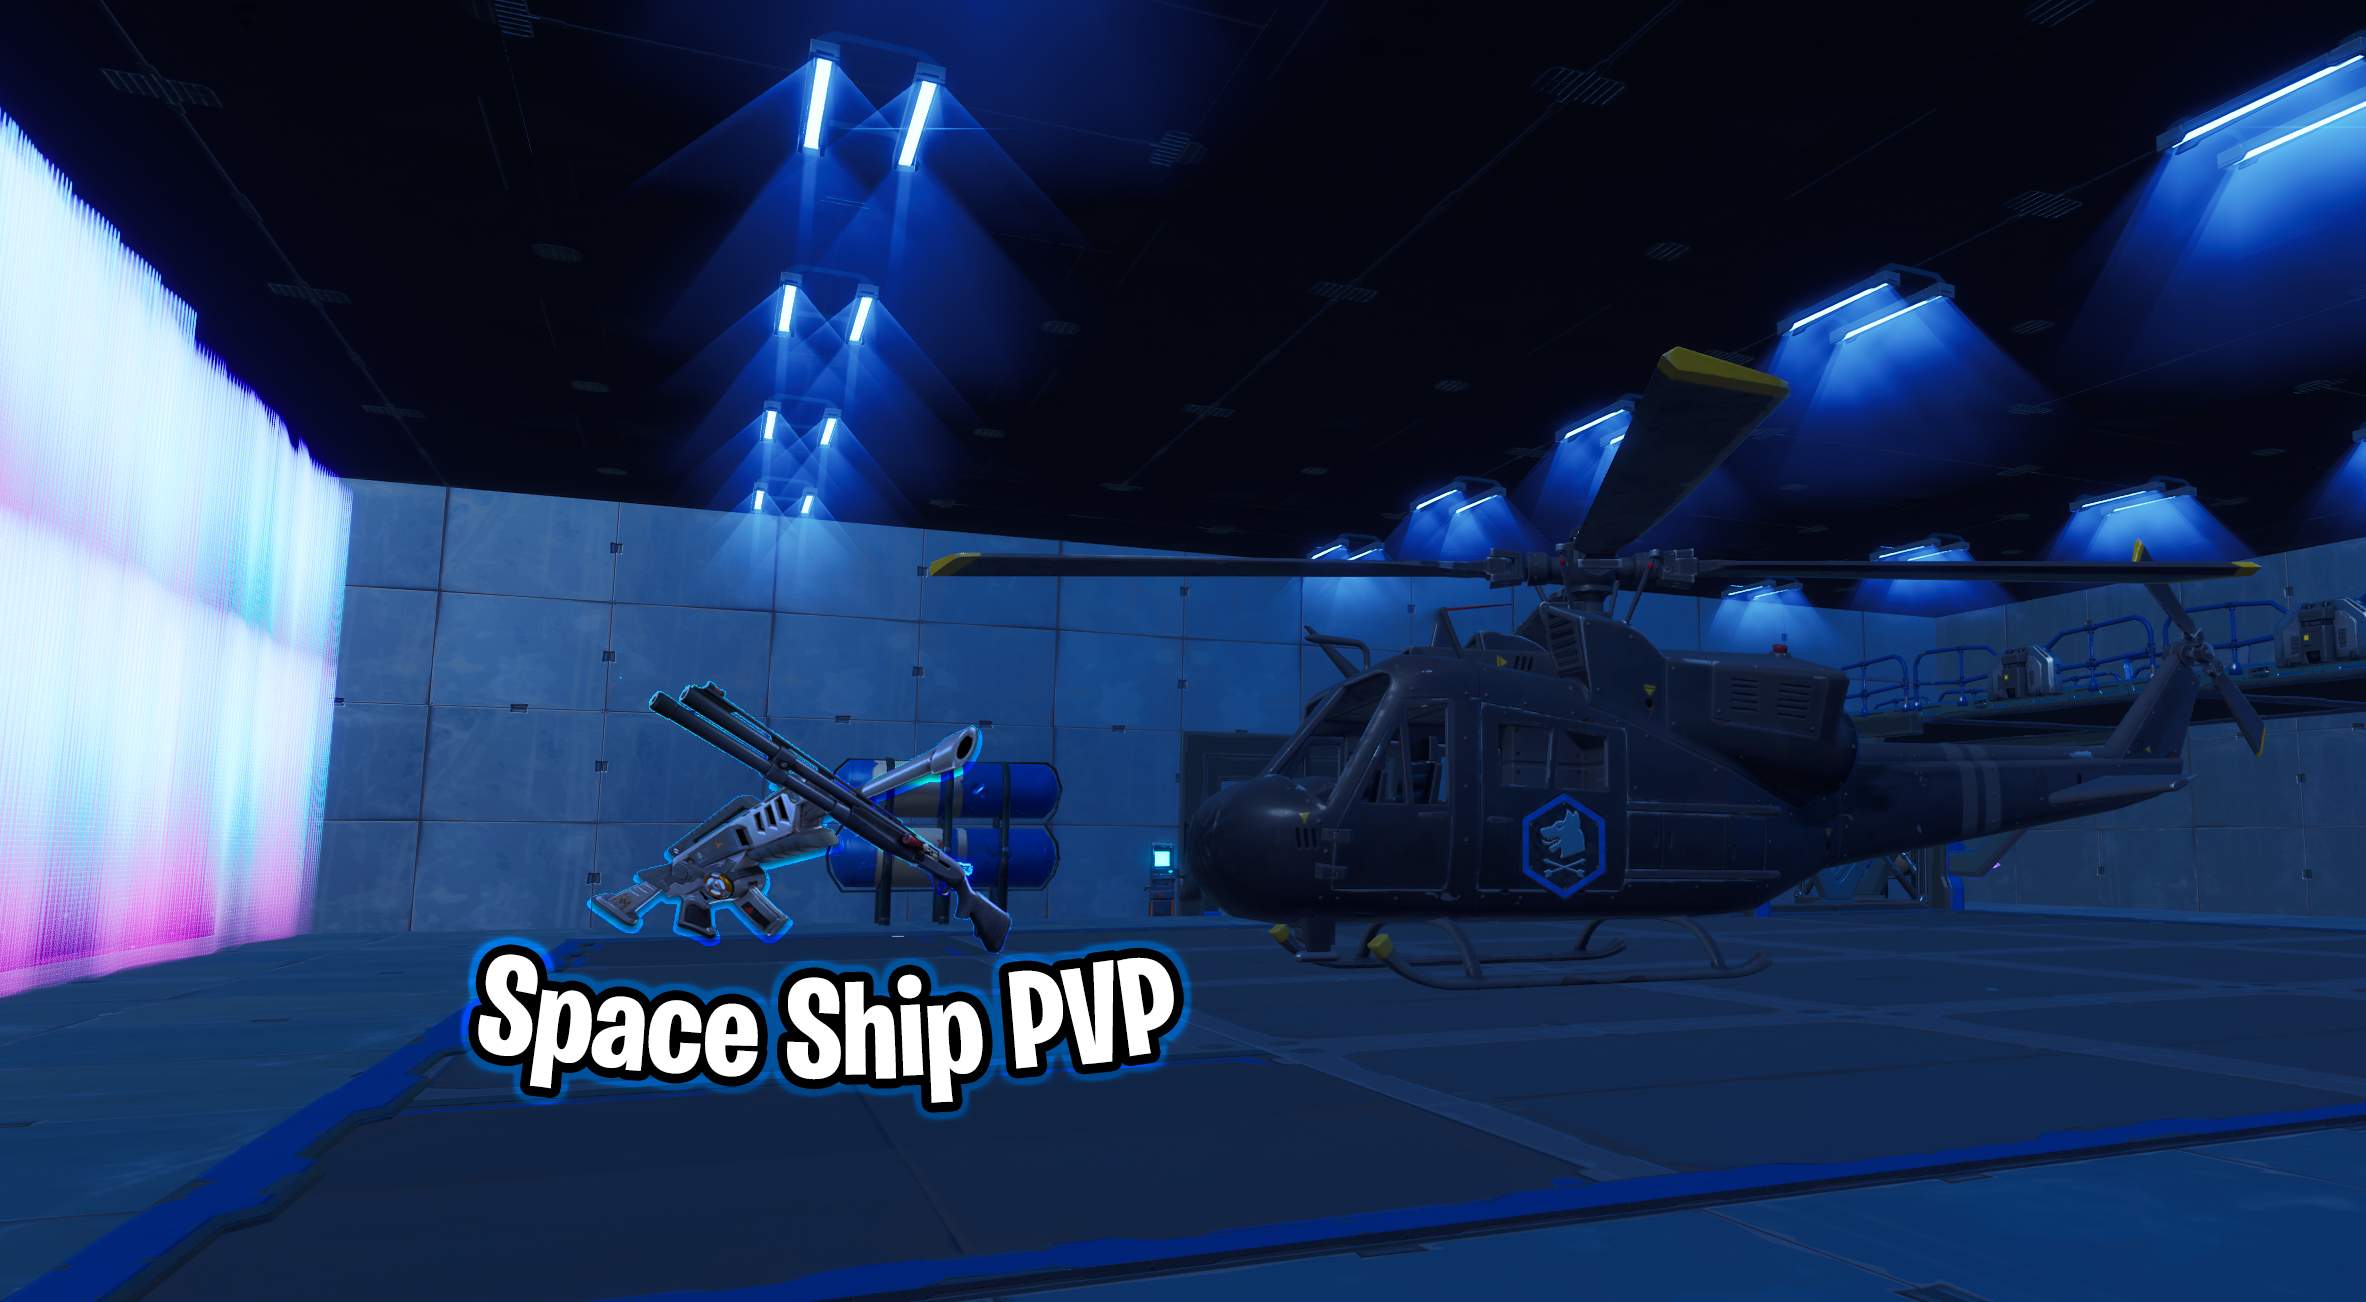 SPACE SHIP PVP